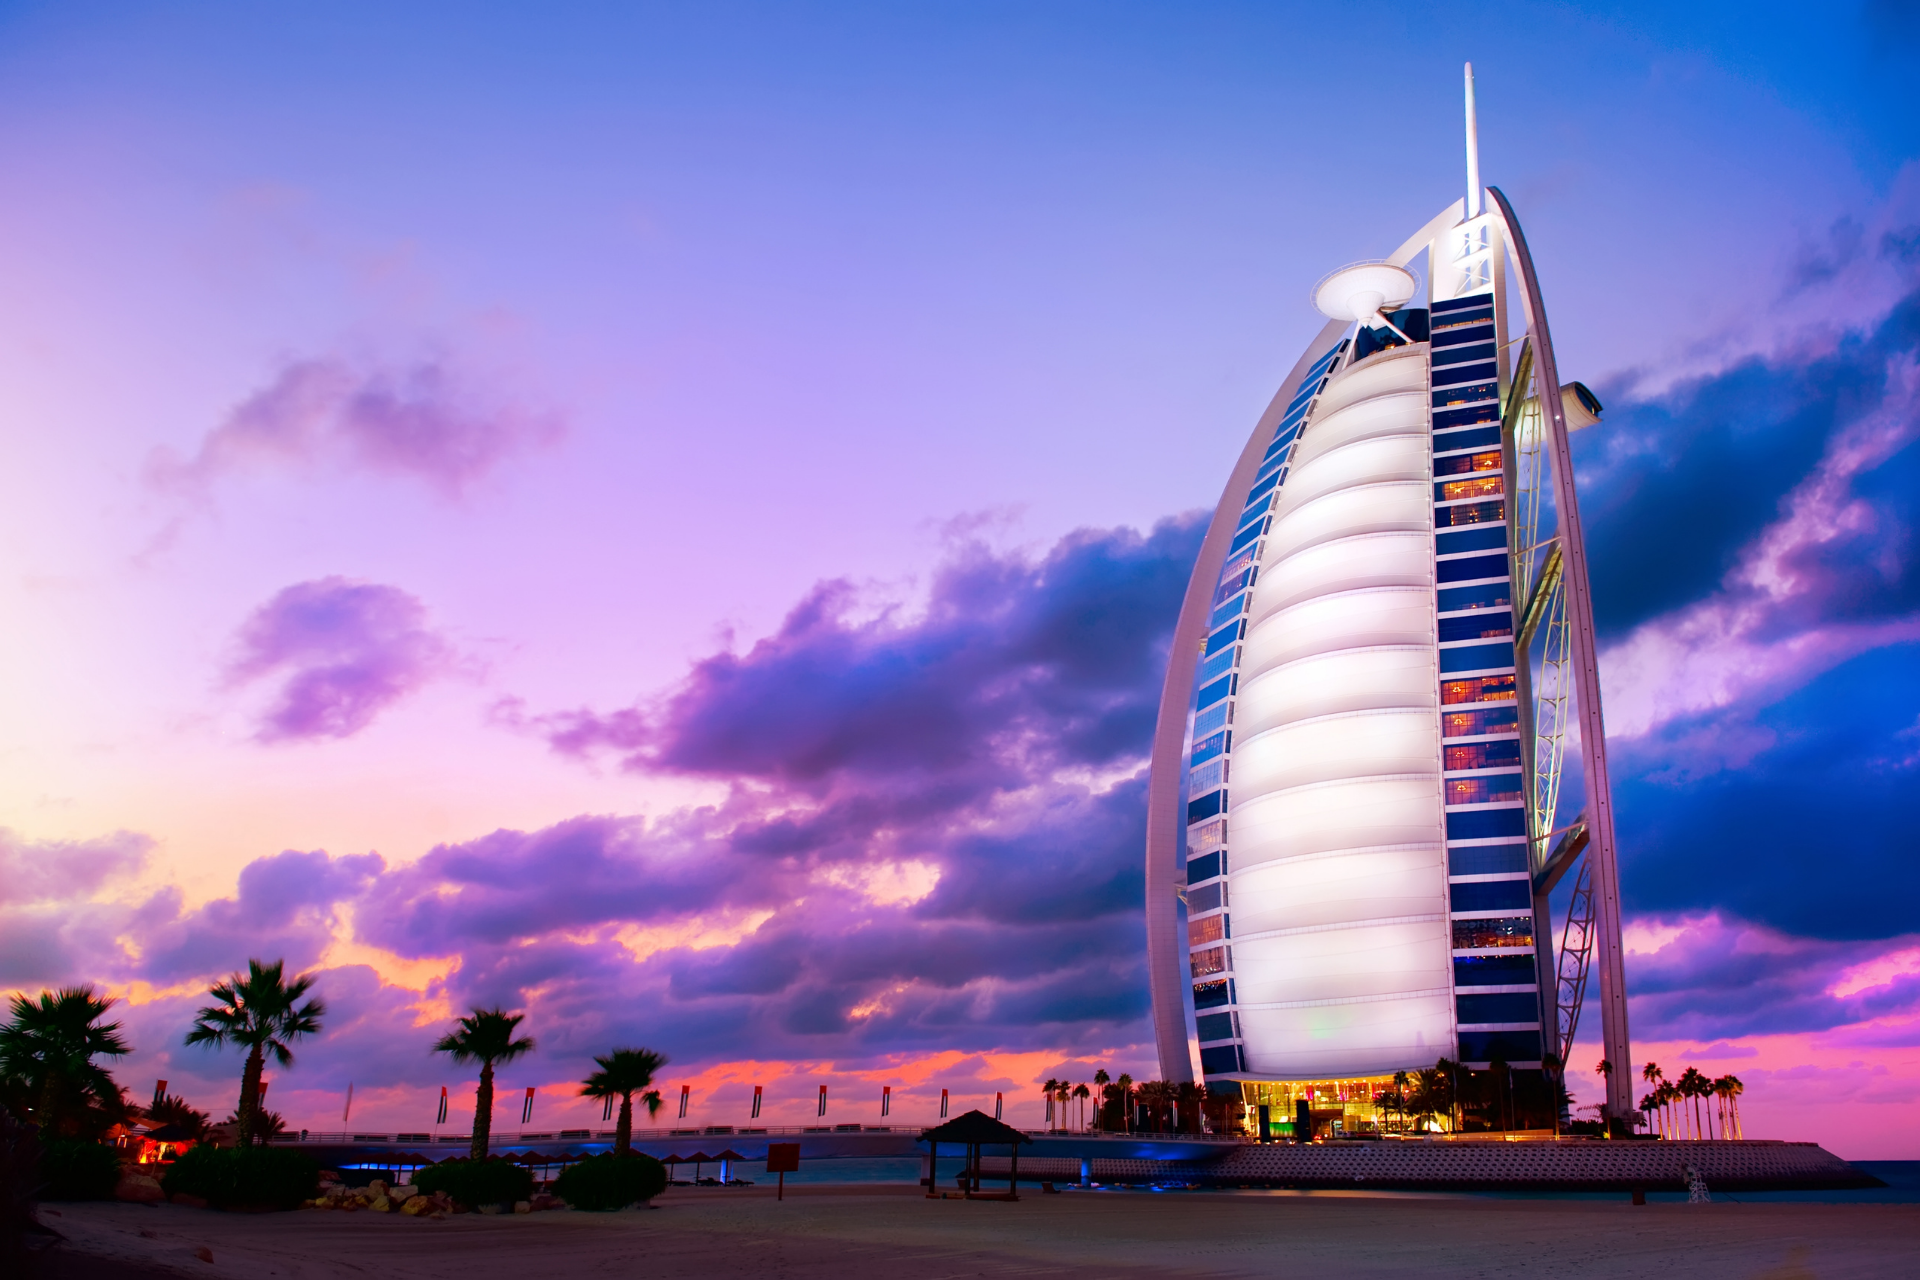 Noor Al Hayat Tourism – Dubai Holiday and Visa Services at Best Price